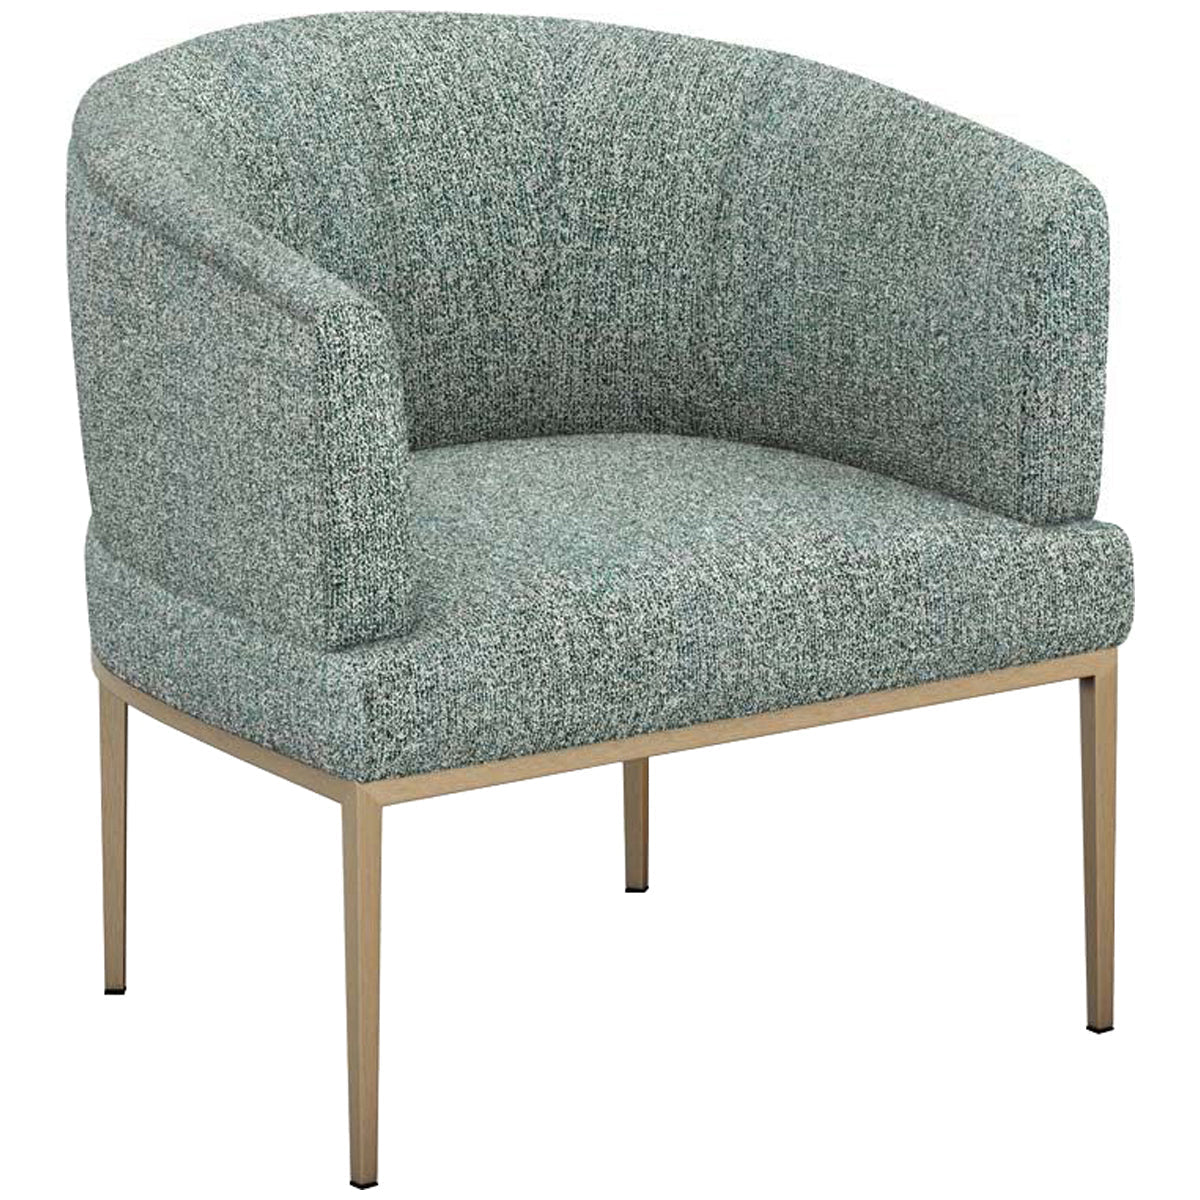 Interlude Home Martine Chair